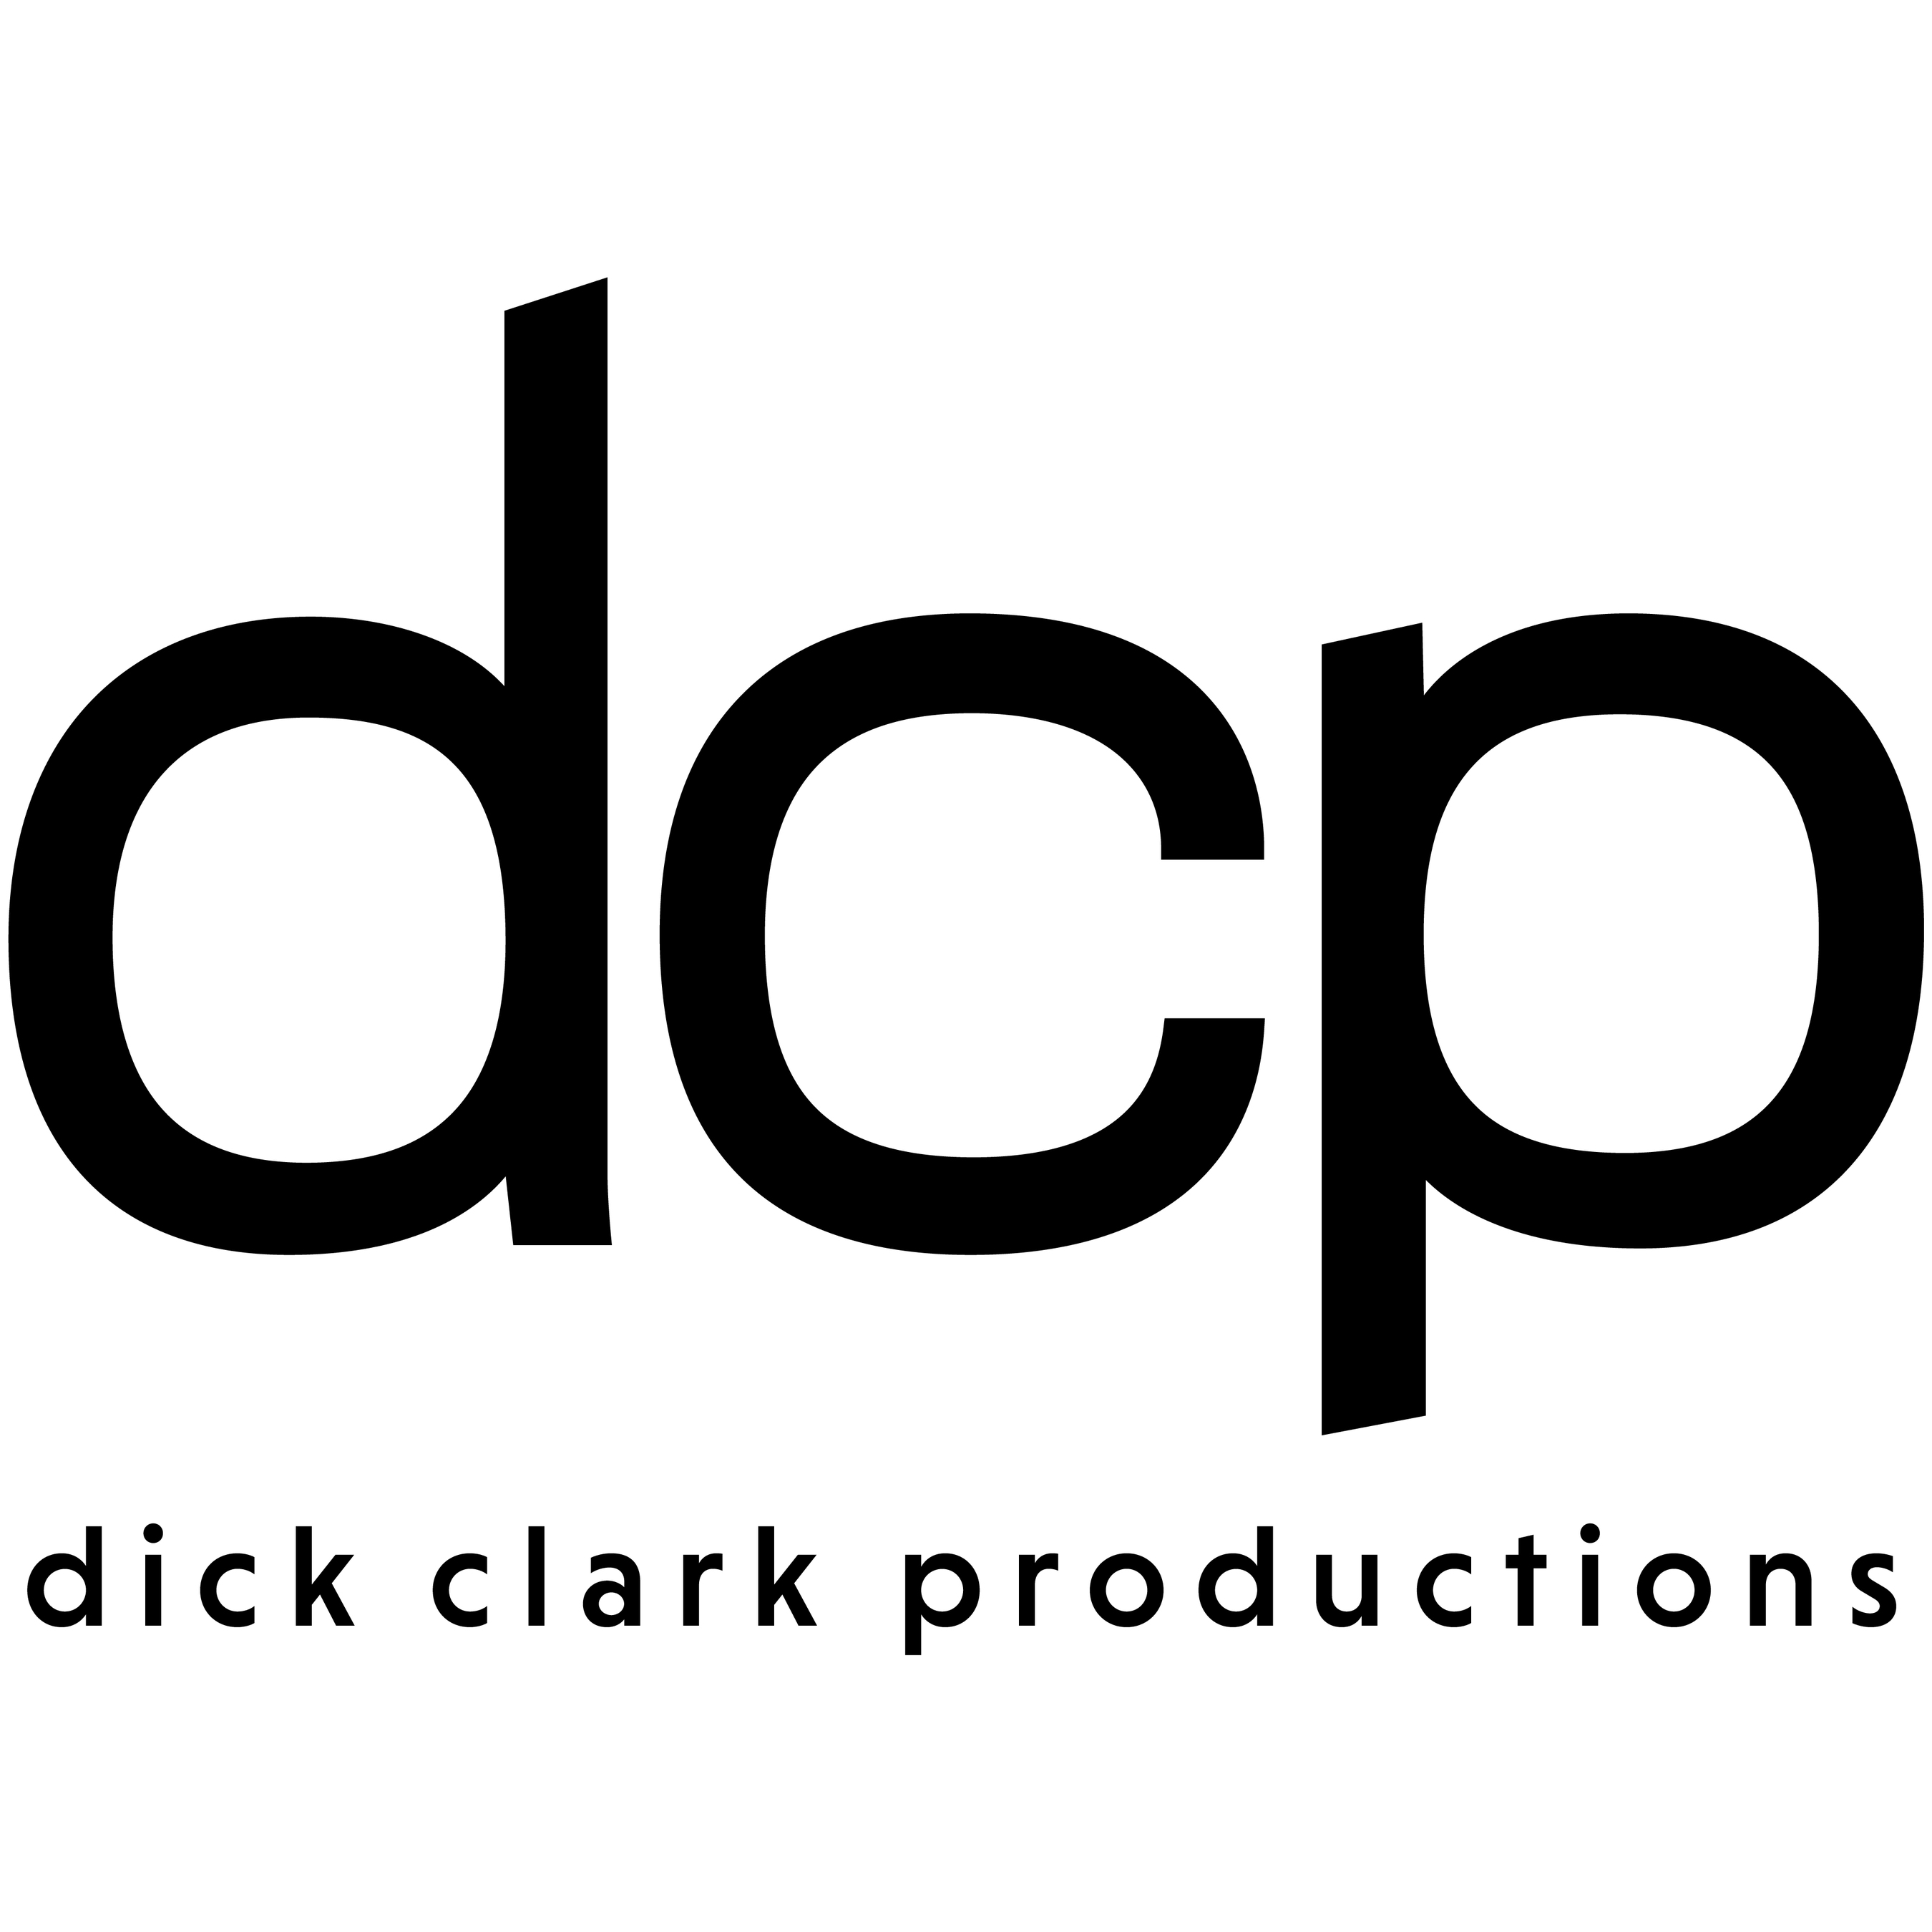 Dick clark productions linkedin